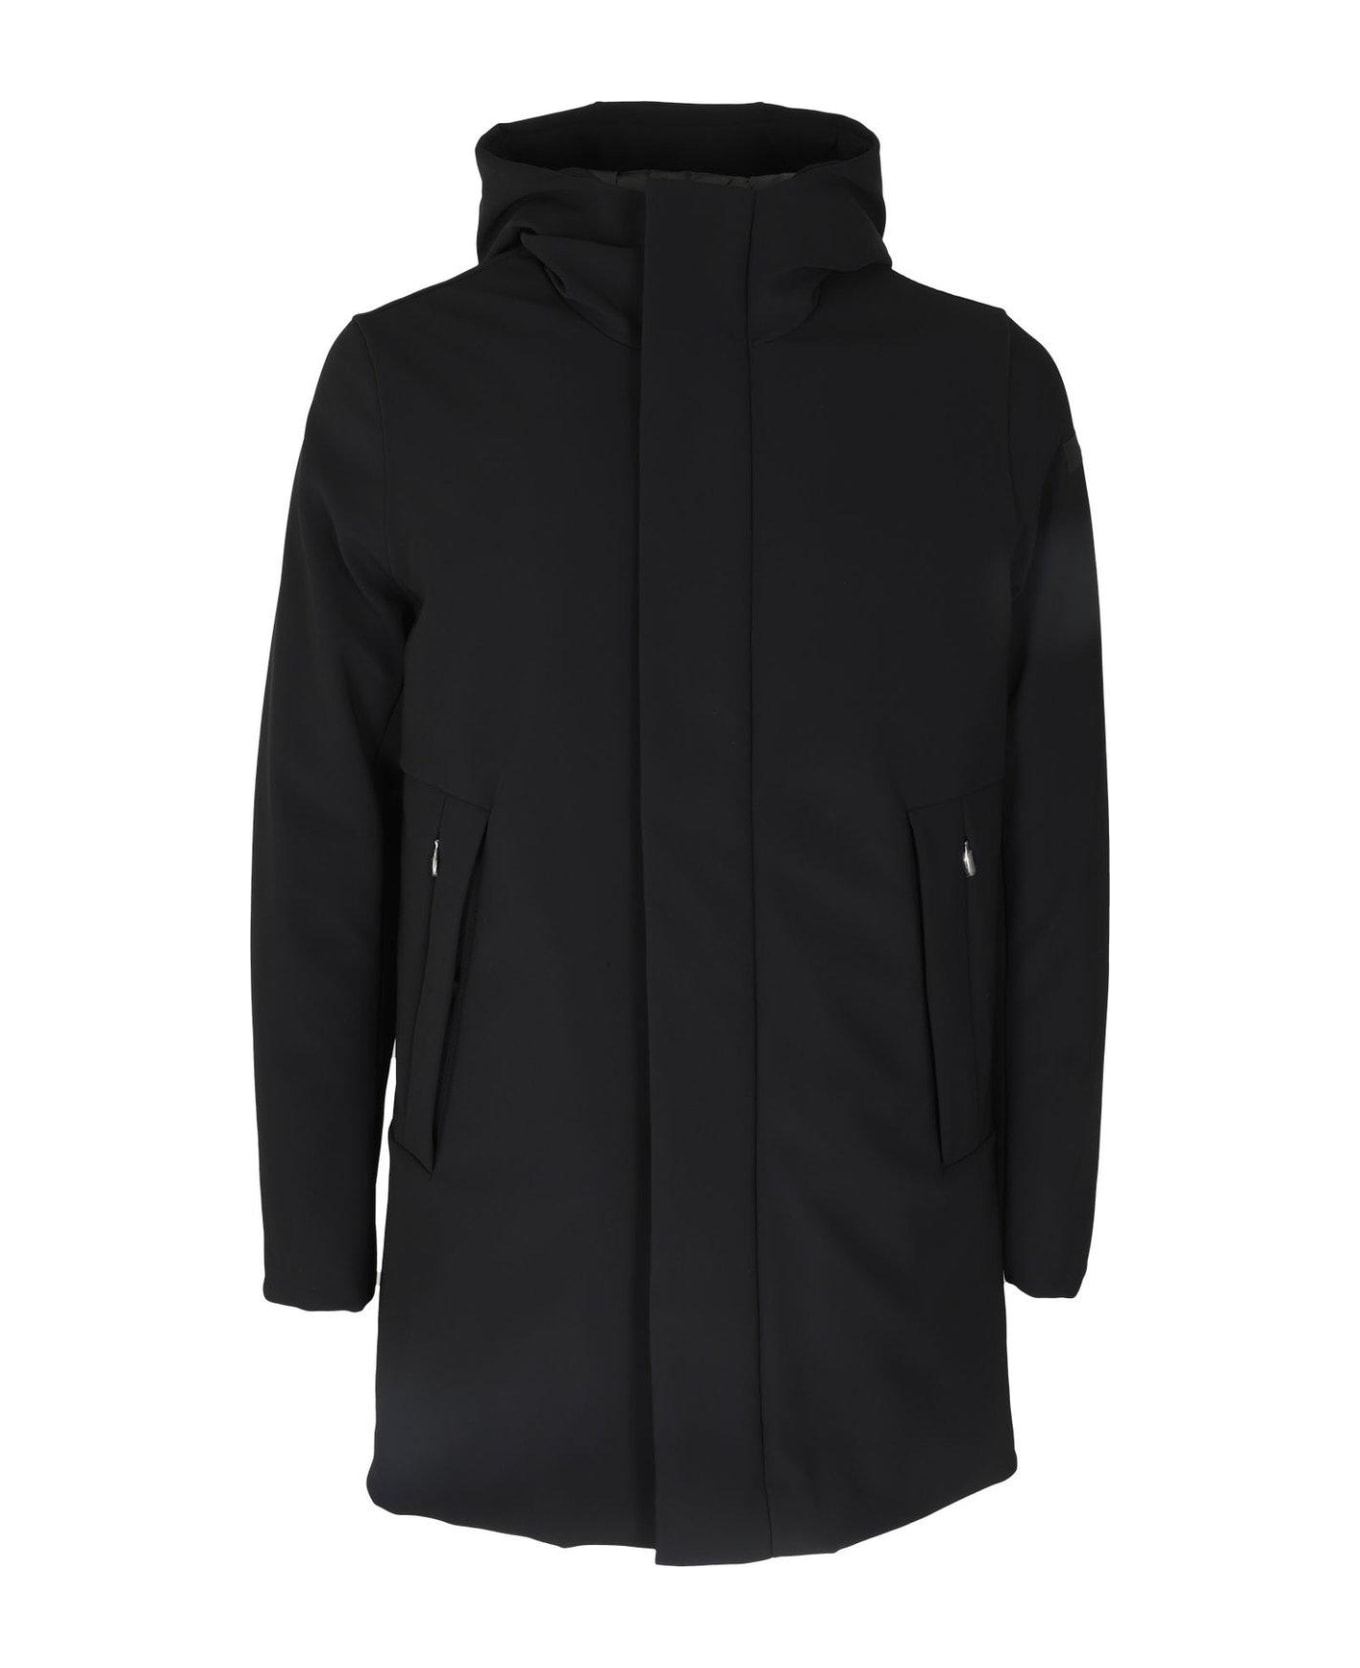 RRD - Roberto Ricci Design Long-sleeved Hooded Parka - Black